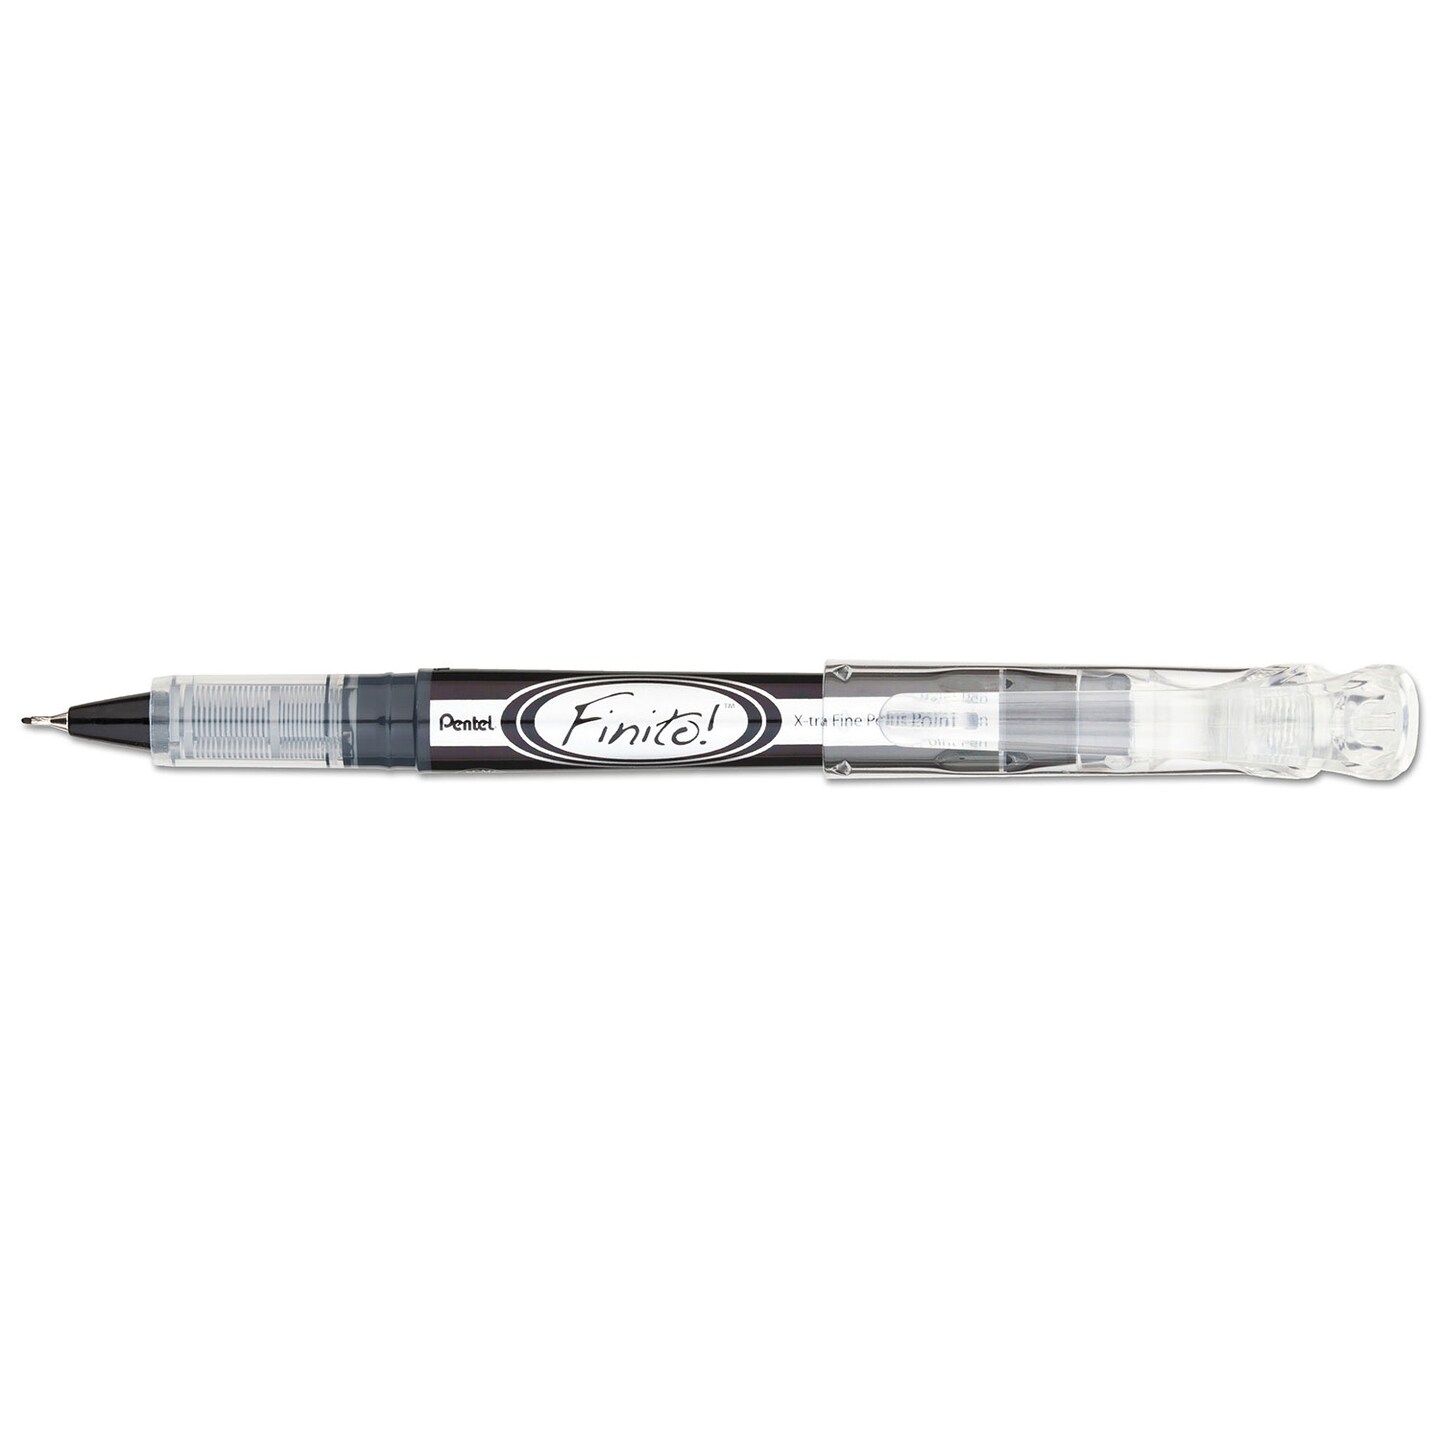 Pentel Finito! Porous Point Pen .4mm Black/Silver Barrel Black Ink